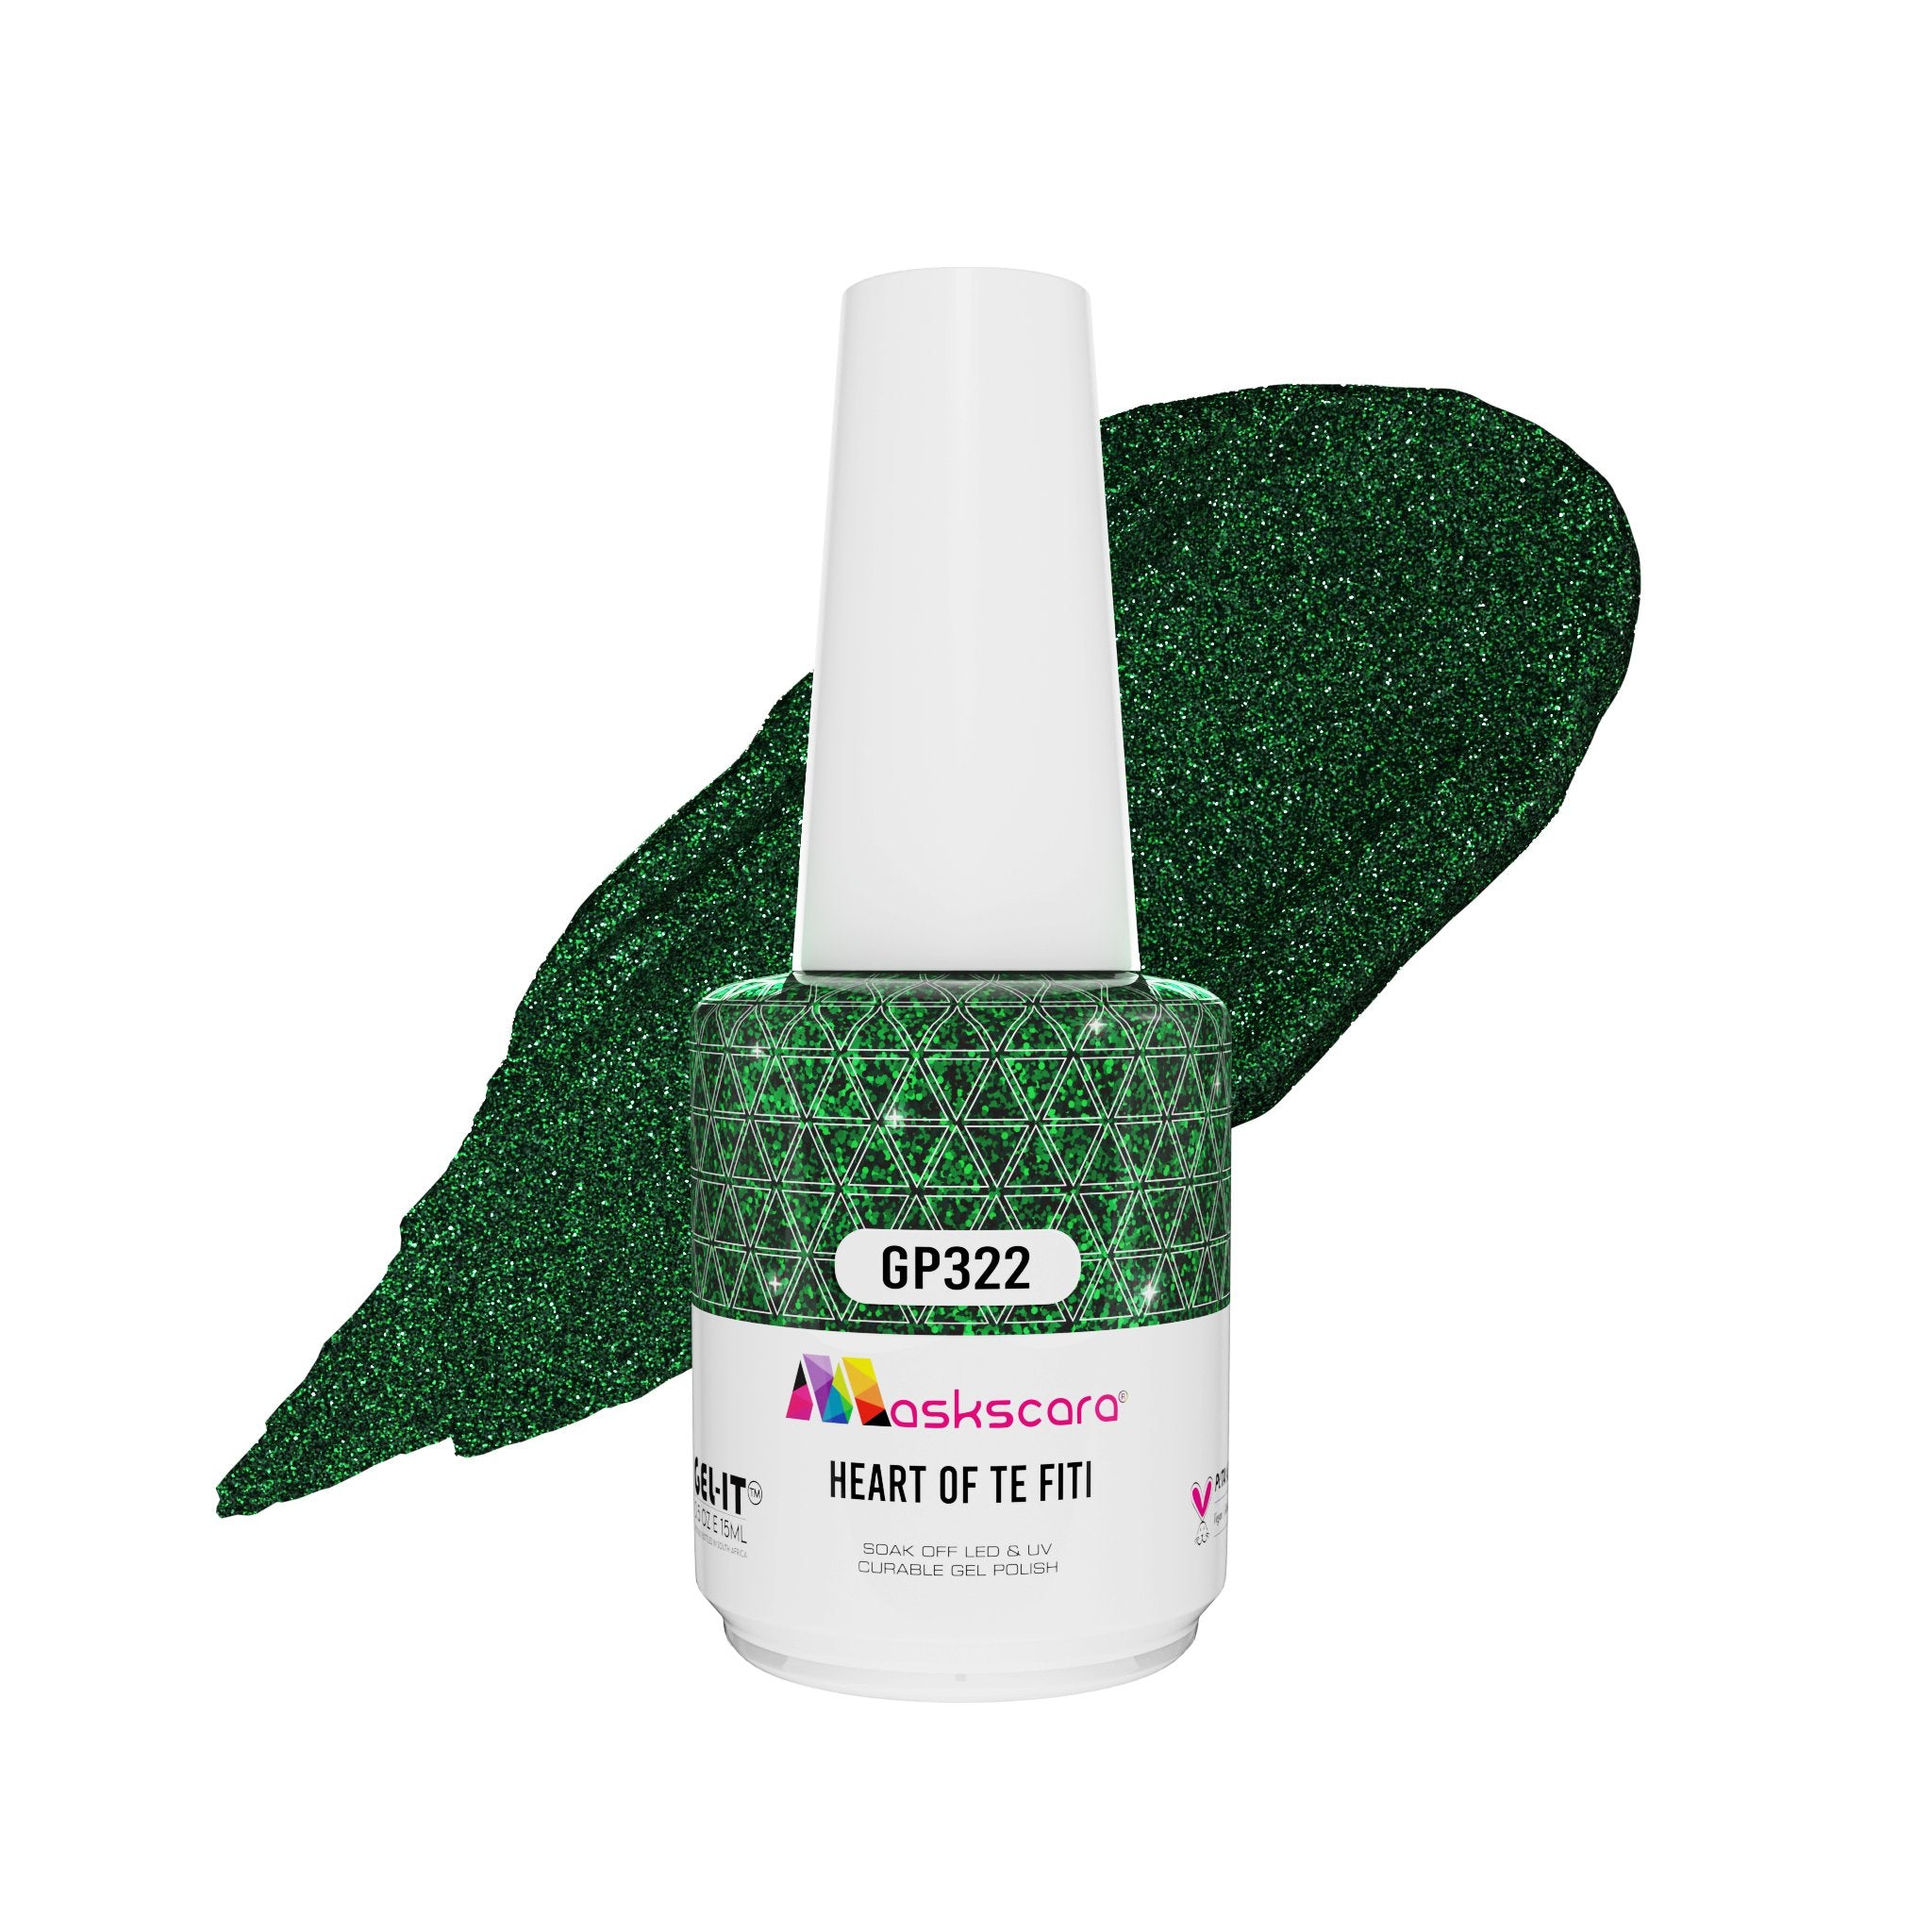 <img scr = “ GP322 Heart Of Te Fiti.jpeg” alt = “Emerald Green Shimmer gel polish colour by the brand Maskscara”>